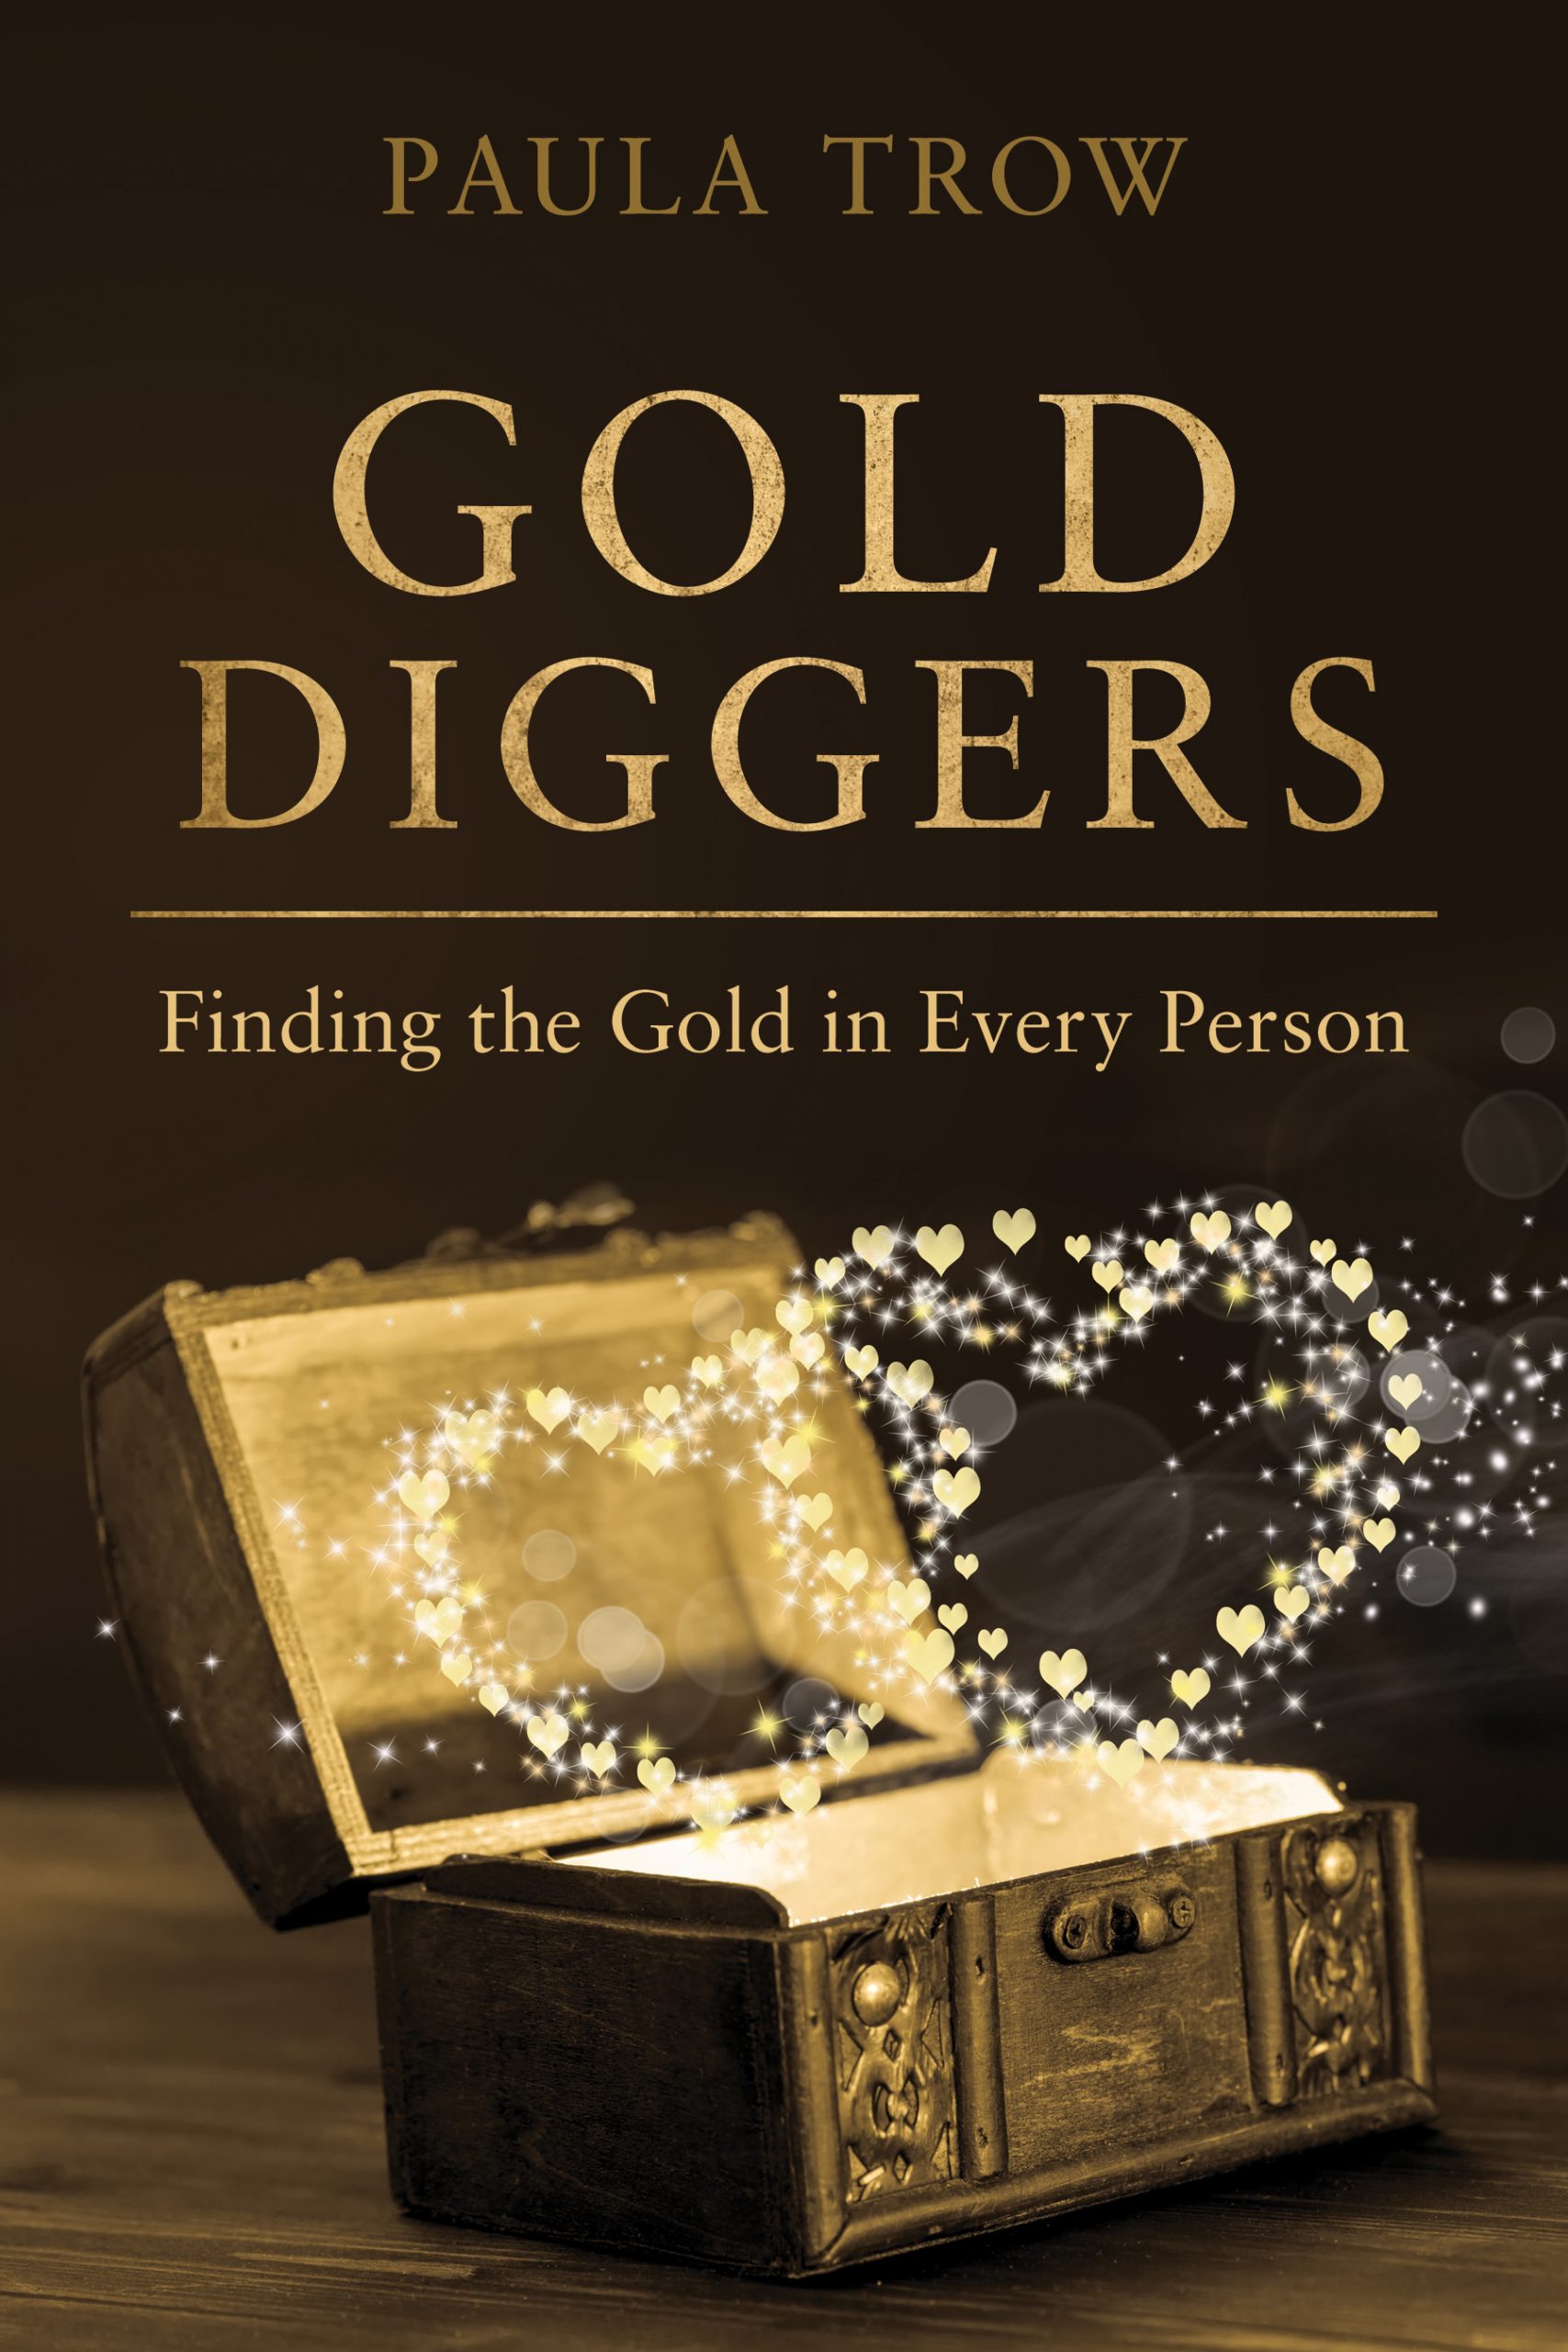 Are you a GOLD DIGGER OR GOAL DIGGER? - Madam Koverage